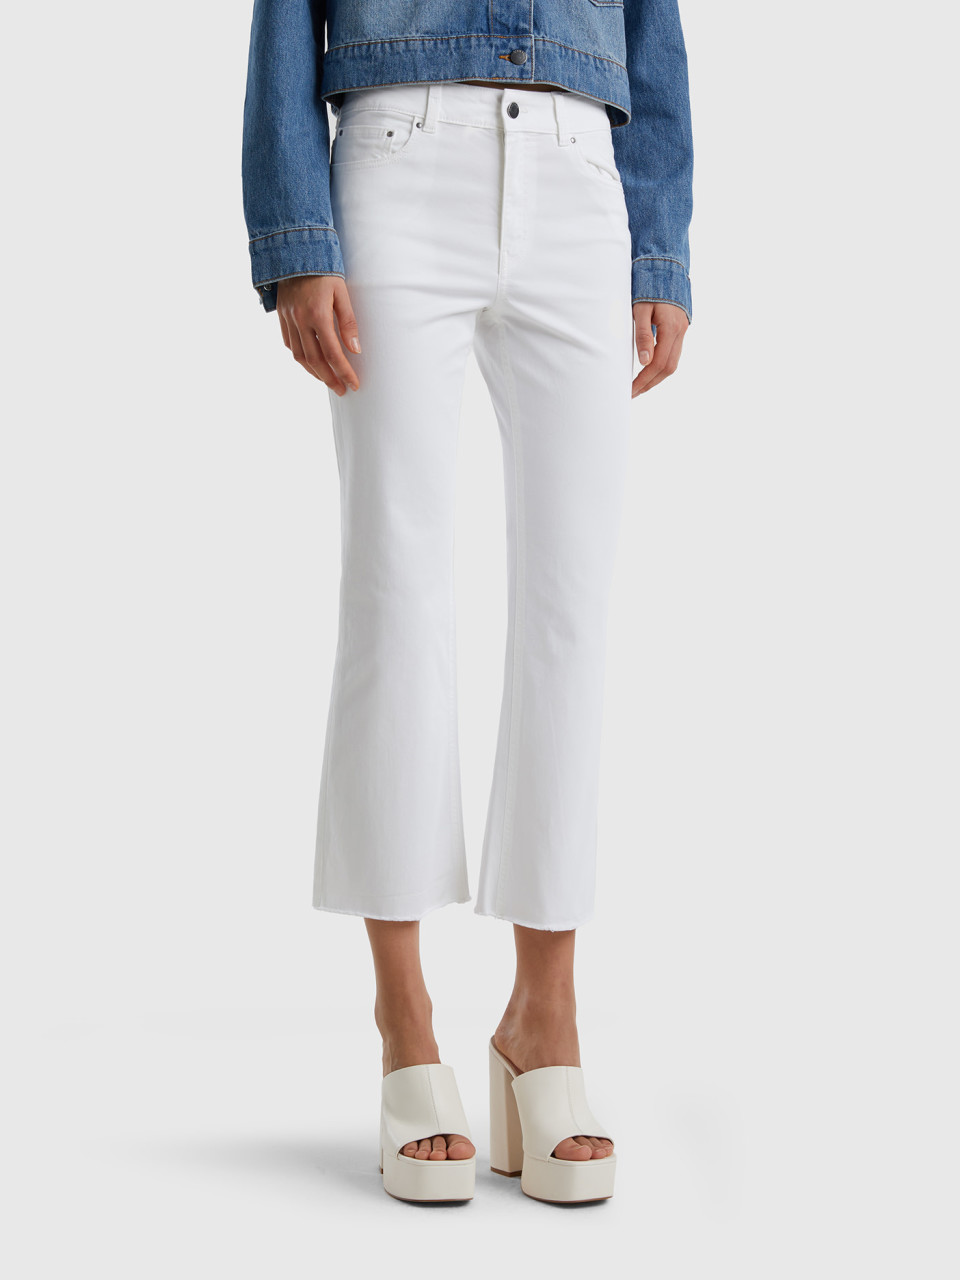 Benetton, Five-pocket Cropped Trousers, White, Women